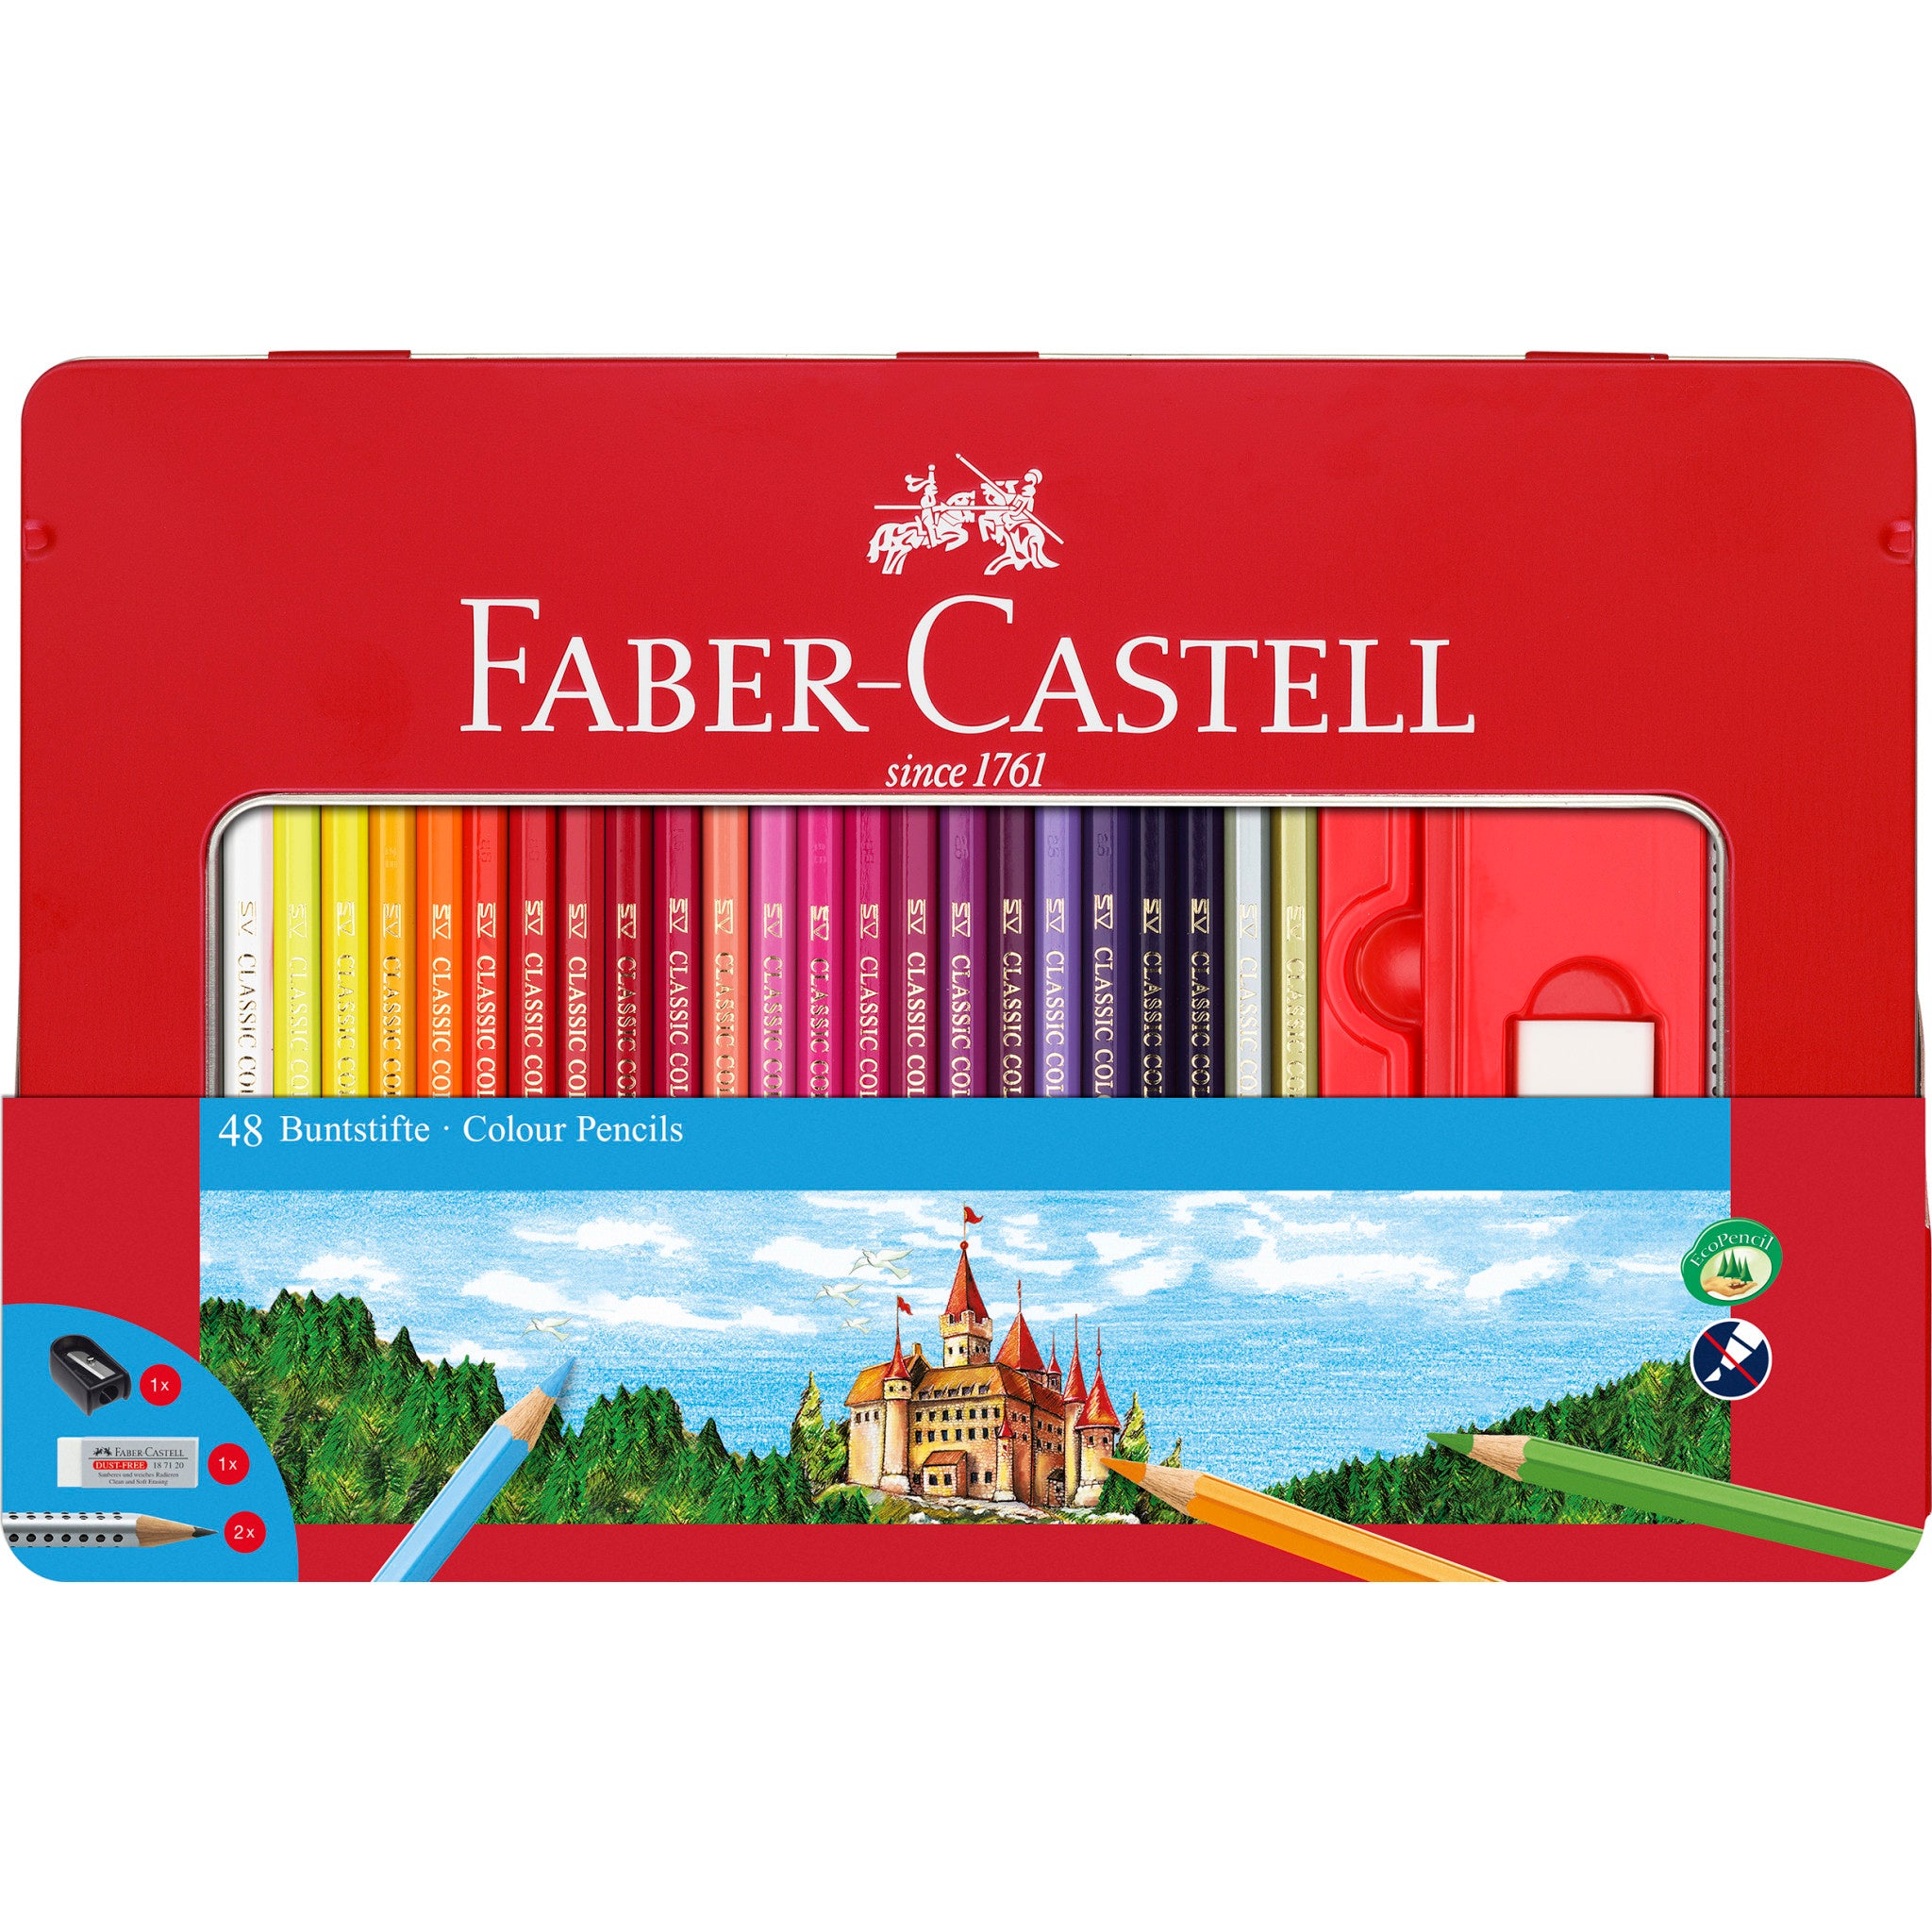 48 Colors Drawing Pencils Professional Watercolor Pencils & Oil Pastel  Coloured Pencil Adult Coloring Drawing Sets